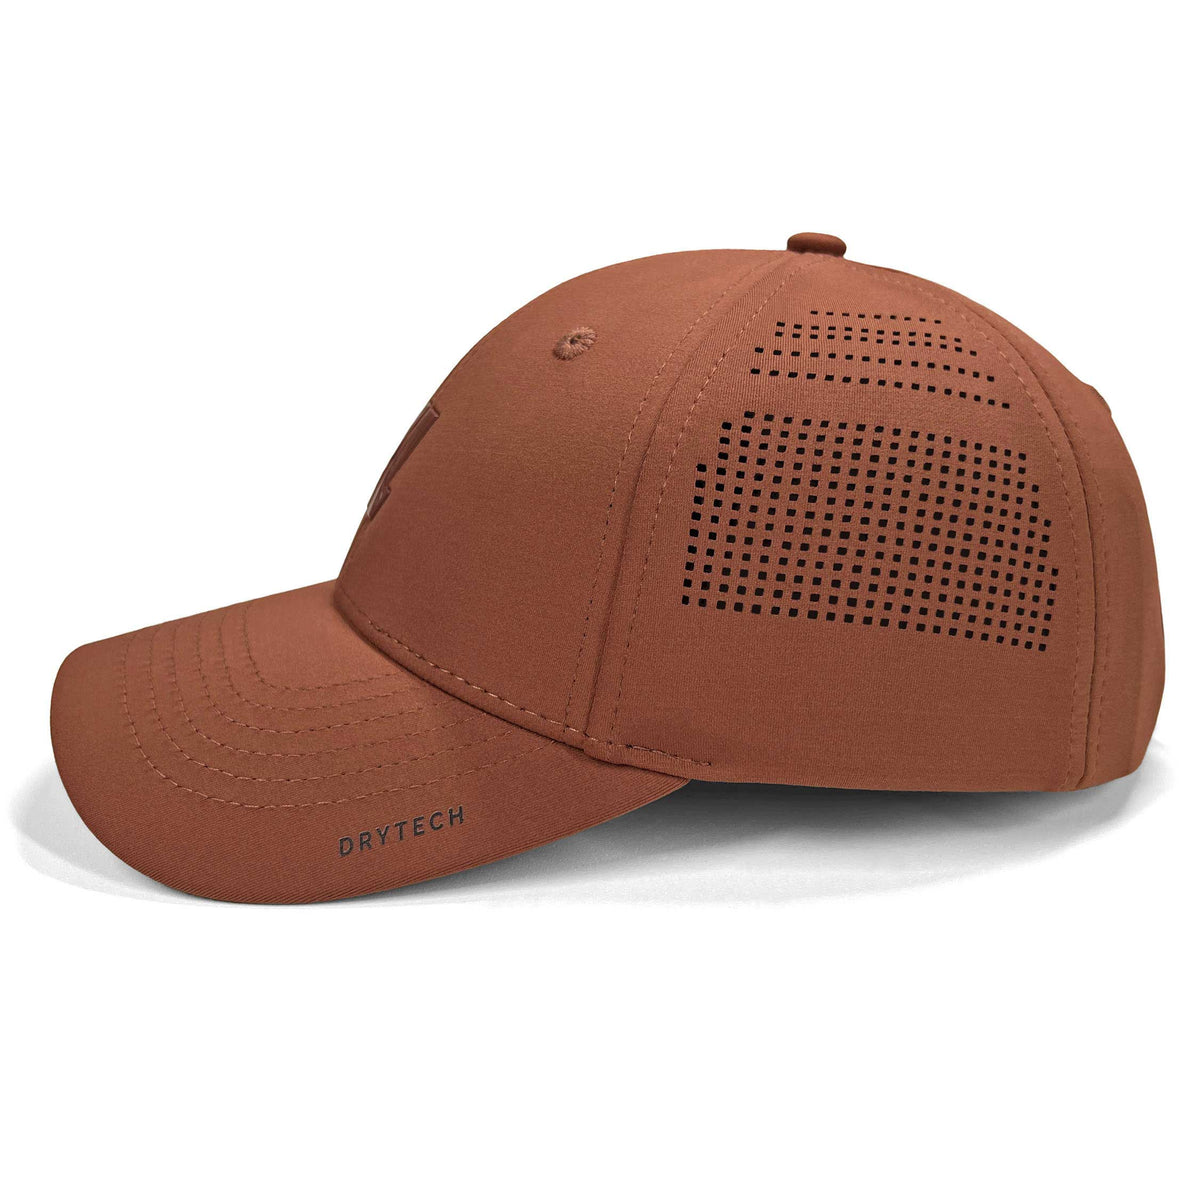 Mens Workout Hat - The Rise & Grind - Shop Athletic Hat & Gym Hats